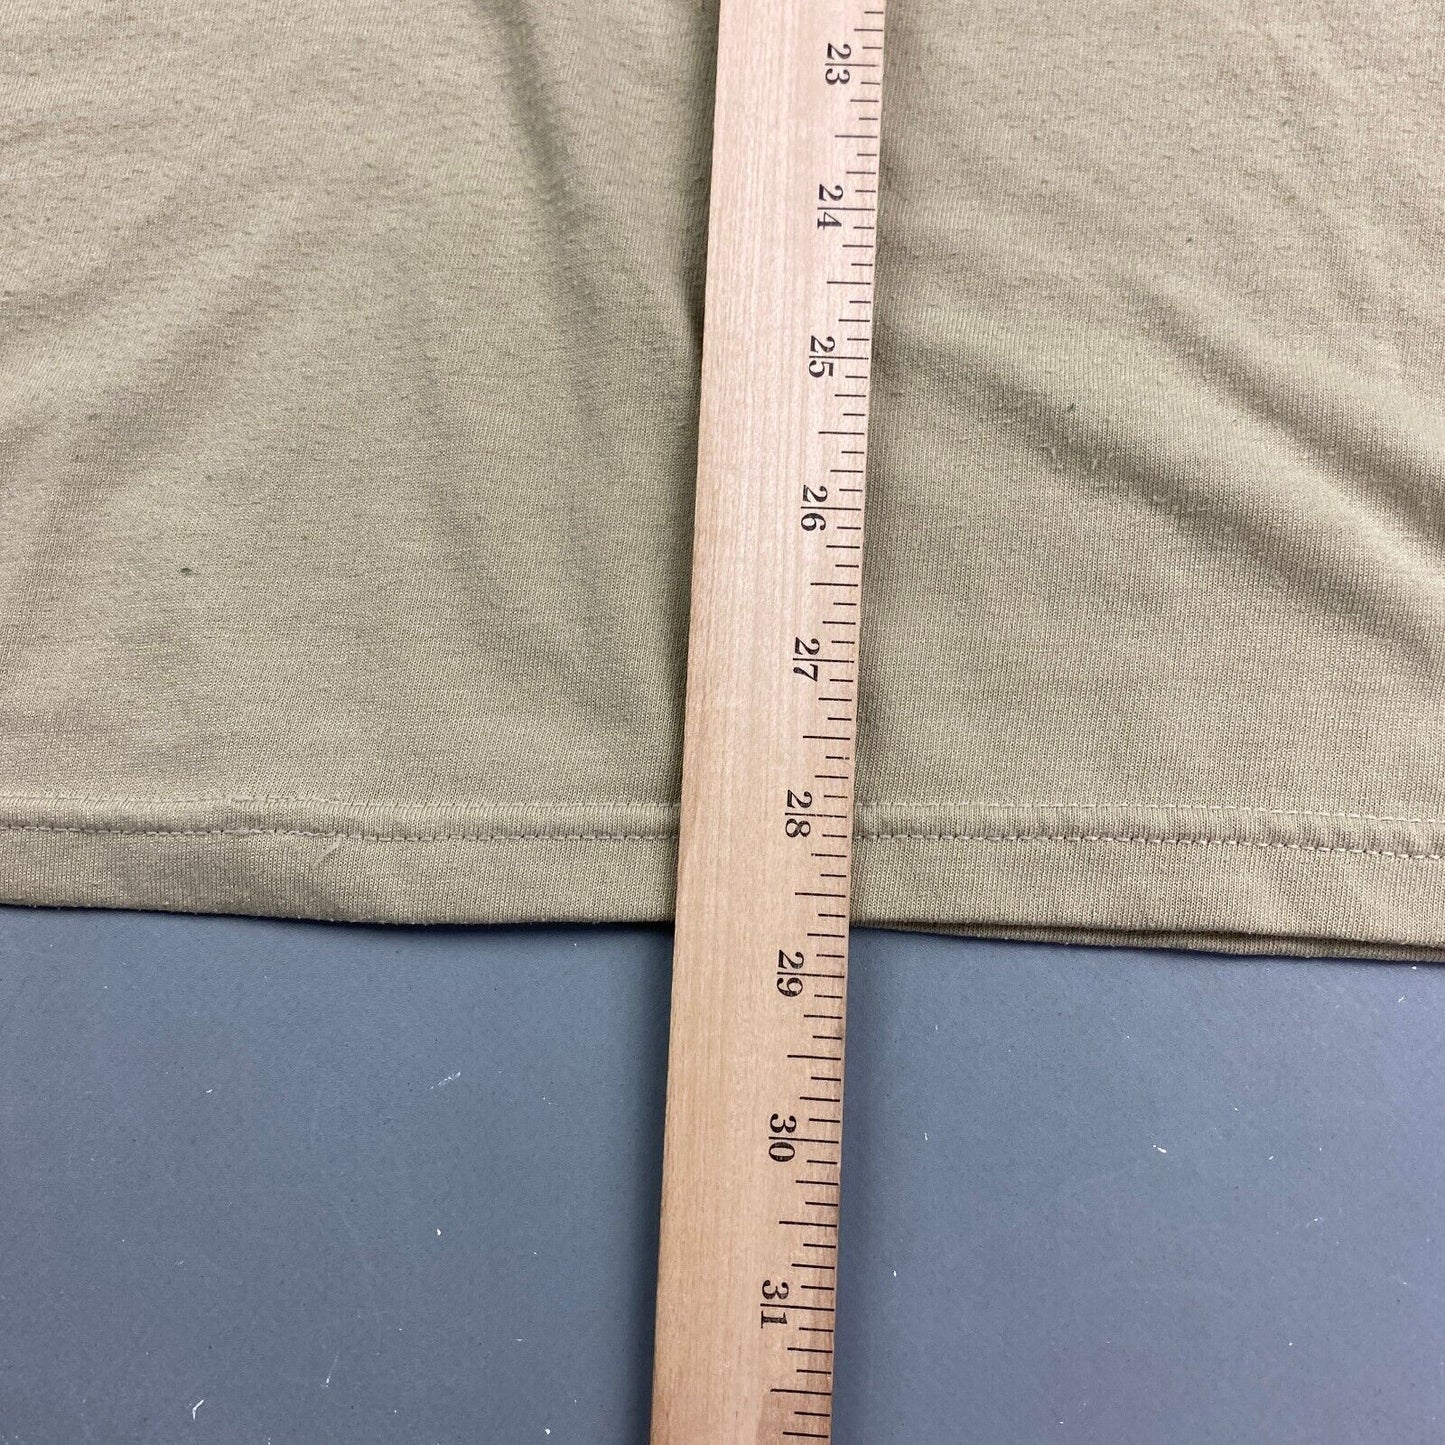 VINTAGE 90s Troop Support Blank Tan T-Shirt sz Medium Adult MadeinUSA